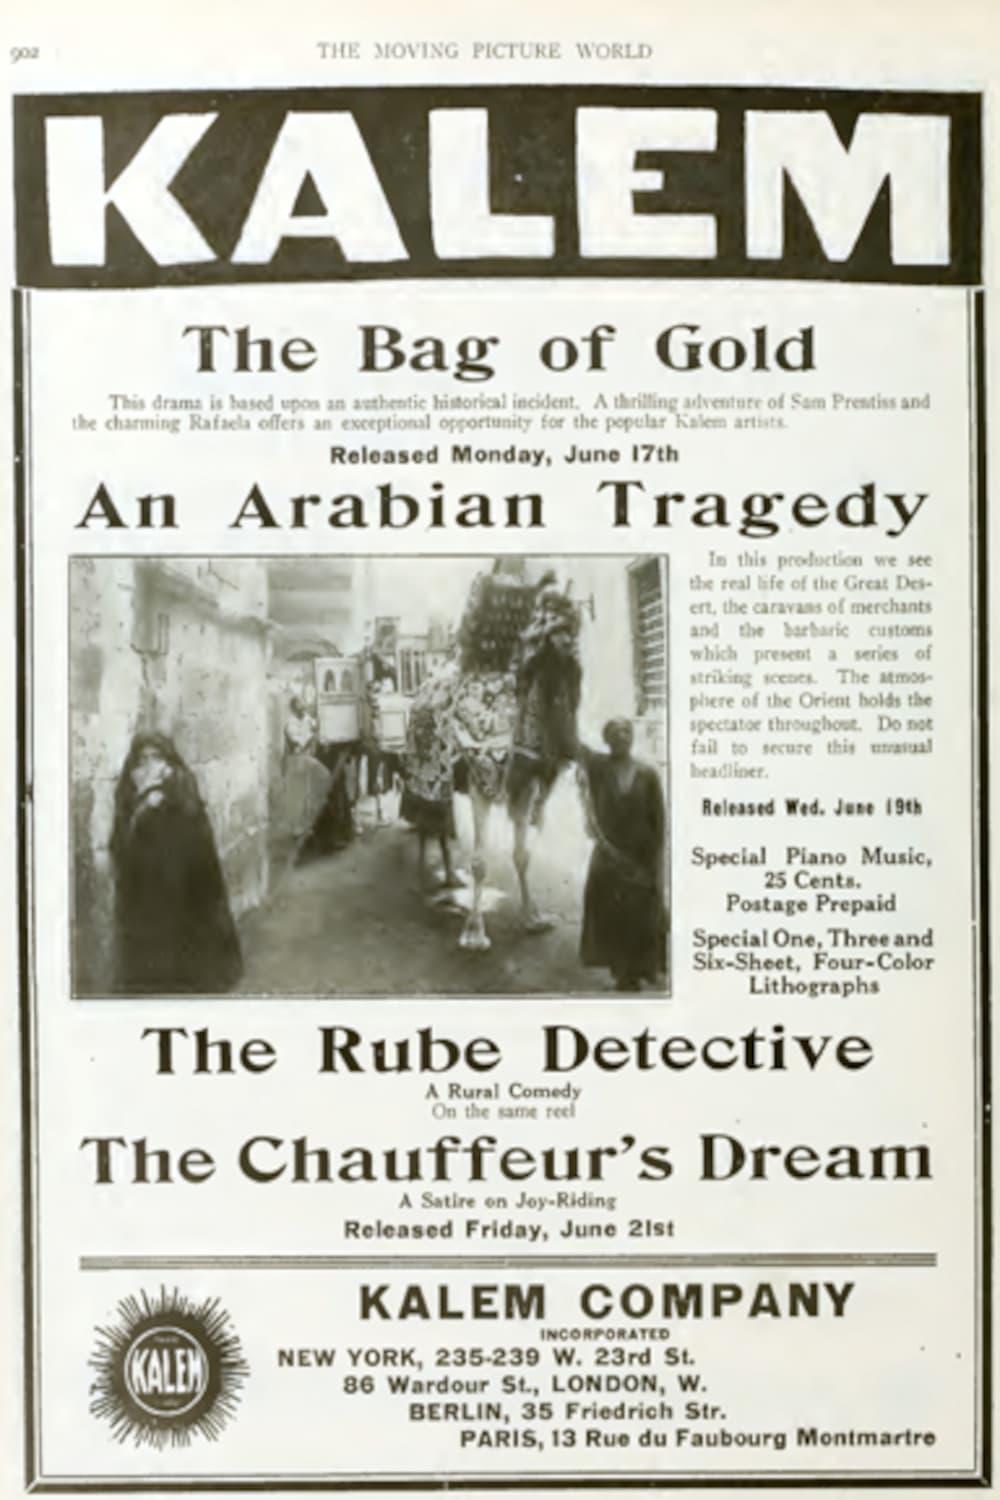 An Arabian Tragedy poster